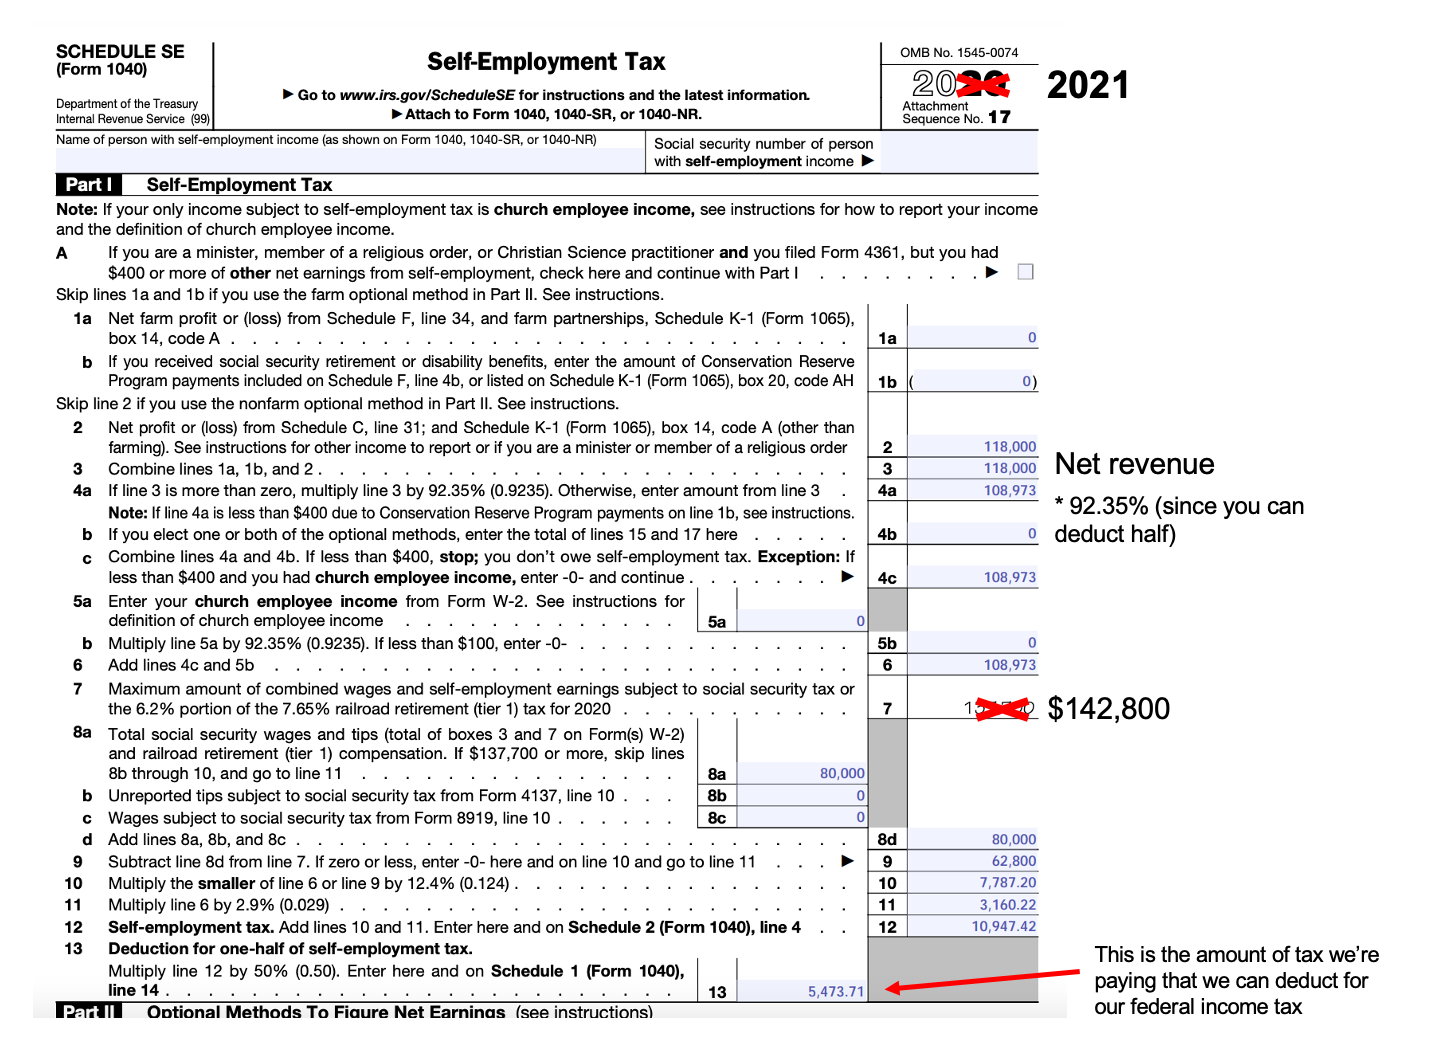 self-employed-tax-refund-calculator-jacedillan